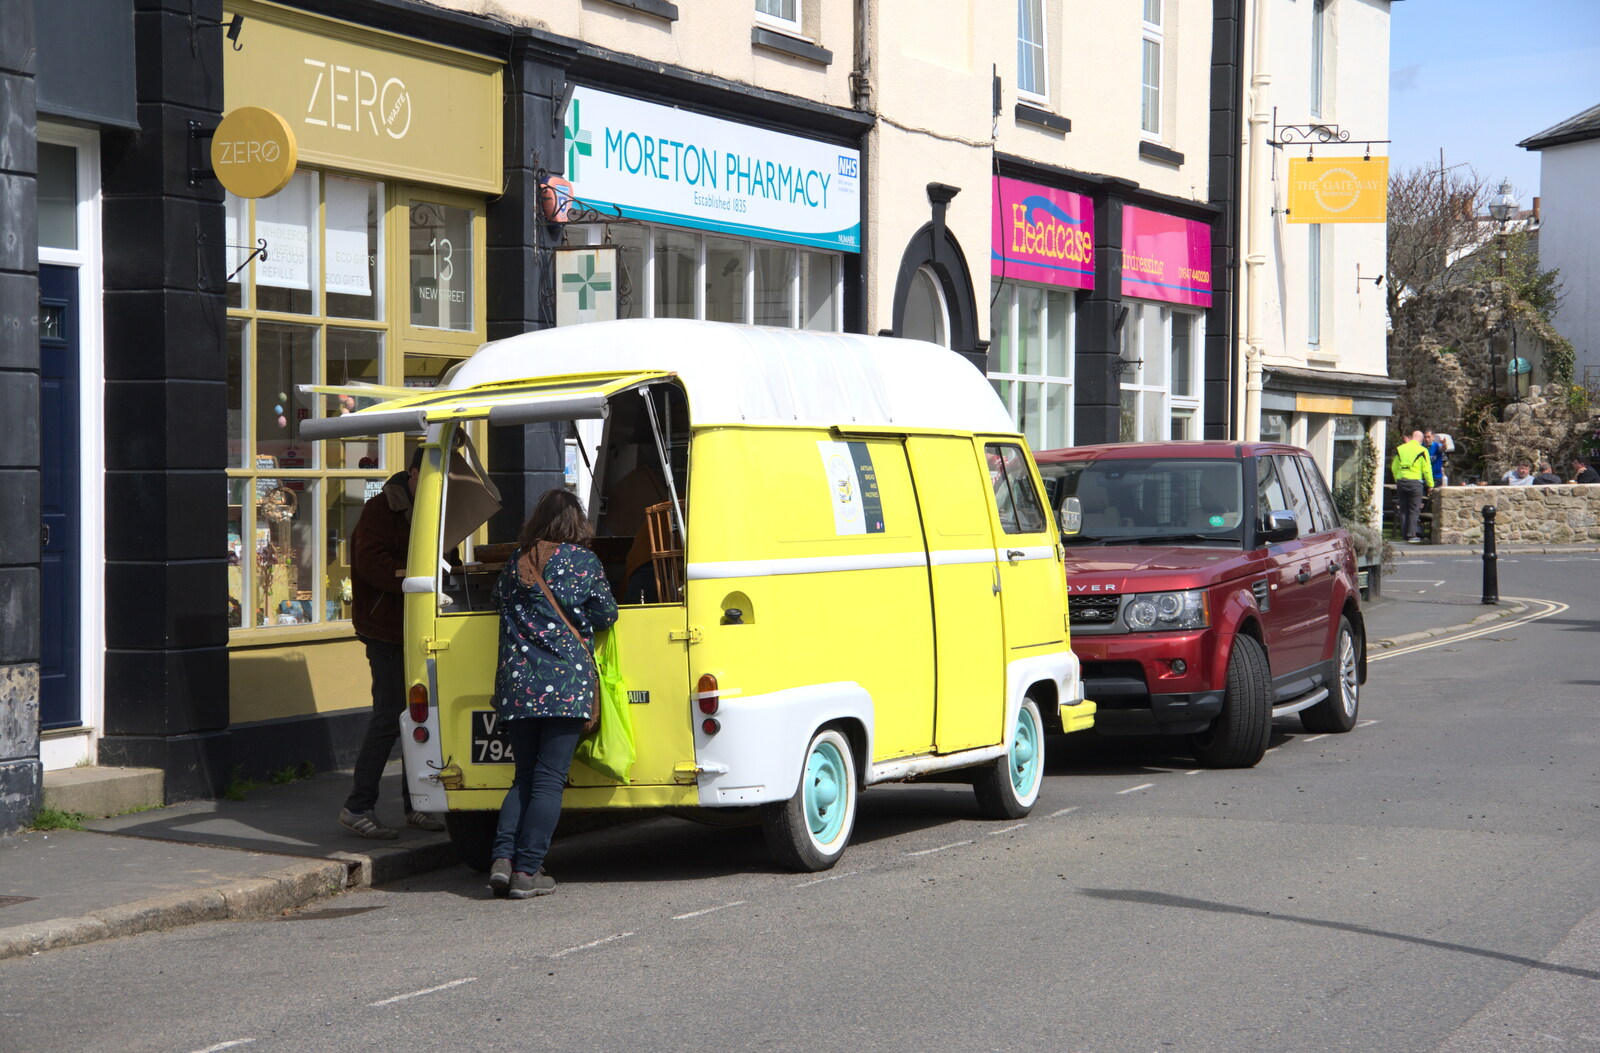 The Van du Pain bakery van from Easter in South Zeal and Moretonhampstead, Devon - 9th April